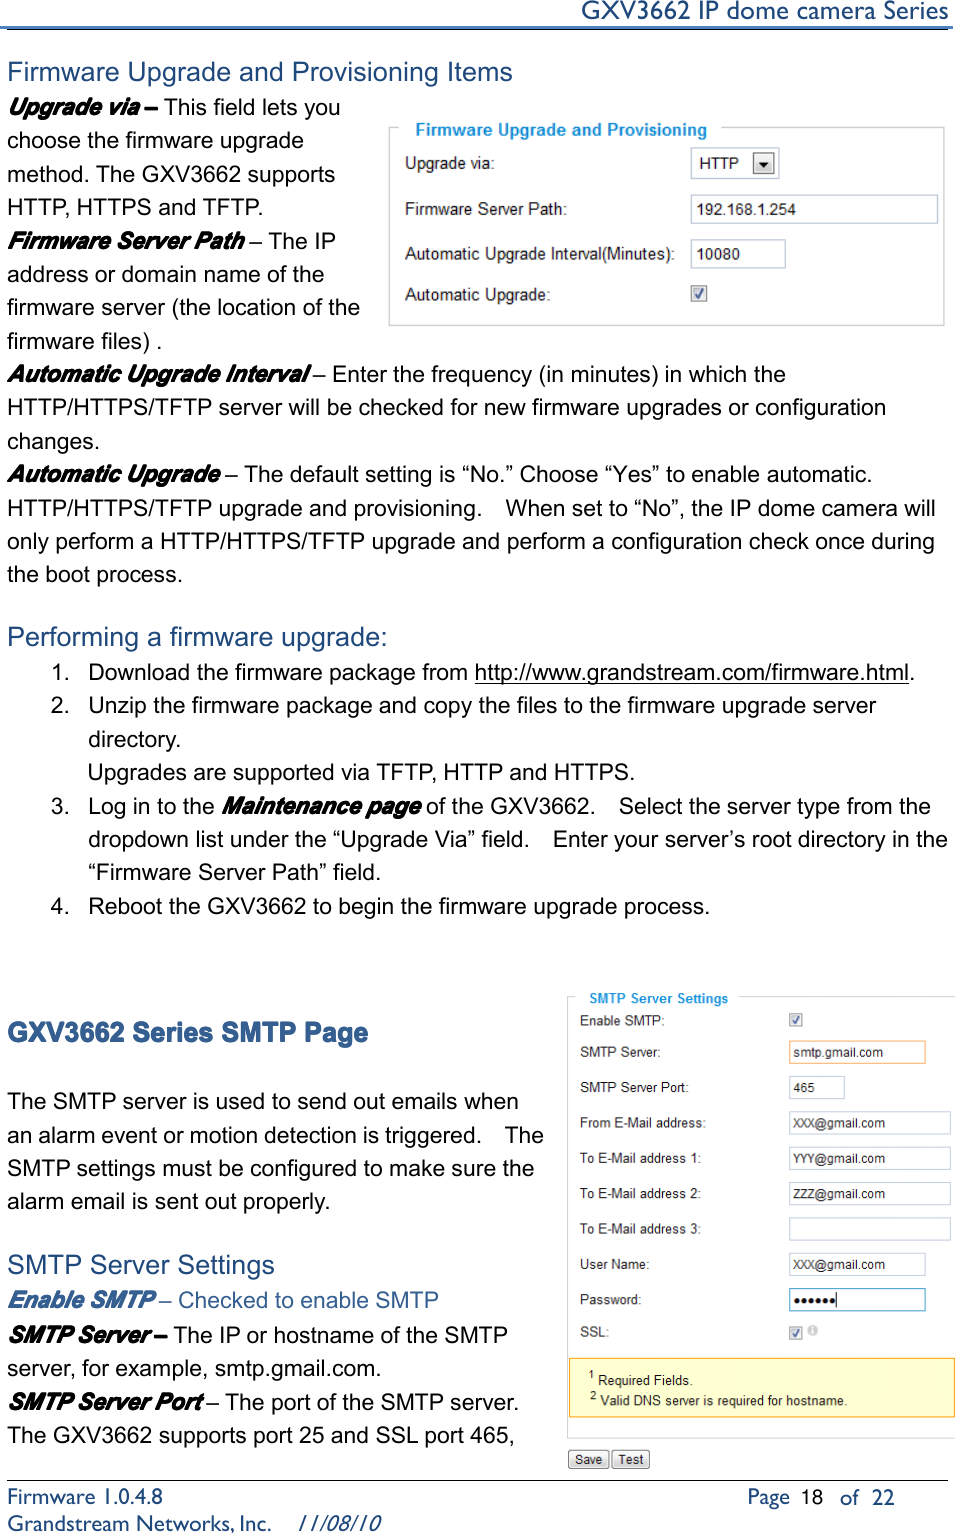 GXV3662IPdomecameraSeriesFirmware1.0.4.8Pageof22GrandstreamNetworks,Inc.11/08/10FirmwareUpgradeandProvisioningItemsUpgrade Upgrade Upgrade Upgradevia via via via––––Thisfieldletsyouchoosethefirmwareupgrademethod.TheGXV3662supportsHTTP ,HTTPSandTFTP .Firmware Firmware Firmware FirmwareServer Server Server ServerPath Path Path Path–TheIPaddressordomainnameofthefirmwareserver(thelocationofthefirmwarefiles).Automatic Automatic Automatic AutomaticUpgrade Upgrade Upgrade UpgradeInterval Interval Interval Interval–Enterthefrequency(inminutes)inwhichtheHTTP/HTTPS/TFTPserverwillbecheckedfornewfirmwareupgradesorconfigurationchanges.Automatic Automatic Automatic AutomaticUpgrade Upgrade Upgrade Upgrade–Thedefaultsettingis“No.”Choose“Yes”toenableautomatic.HTTP/HTTPS/TFTPupgradeandprovisioning.Whensetto“No”,theIPdomecamerawillonlyperformaHTTP/HTTPS/TFTPupgradeandperformaconfigurationcheckonceduringthebootprocess.Performingafirmwareupgrade:1.Downloadthefirmwarepackagefromhttp://www.grandstream.com/firmware.html.2.Unzipthefirmwarepackageandcopythefilestothefirmwareupgradeserverdirectory.UpgradesaresupportedviaTFTP ,HTTPandHTTPS.3.LogintotheMaintenance Maintenance Maintenance Maintenancepage page page pageoftheGXV3662.Selecttheservertypefromthedropdownlistunderthe“UpgradeVia”field.Enteryourserver’srootdirectoryinthe“FirmwareServerPath”field.4.ReboottheGXV3662tobeginthefirmwareupgradeprocess.GXV3662 GXV3662 GXV3662 GXV3662Series Series Series SeriesSMTP SMTP SMTP SMTPPage Page Page PageTheSMTPserverisusedtosendoutemailswhenanalarmeventormotiondetectionistriggered.TheSMTPsettingsmustbeconfiguredtomakesurethealarmemailissentoutproperly.SMTPServerSettingsEnable Enable Enable EnableSMTP SMTP SMTP SMTP–CheckedtoenableSMTPSMTP SMTP SMTP SMTPServer Server Server Server––––TheIPorhostnameoftheSMTPserver,forexample,smtp.gmail.com.SMTP SMTP SMTP SMTPServer Server Server ServerPort Port Port Port–TheportoftheSMTPserver.TheGXV3662supportsport25andSSLport465,18